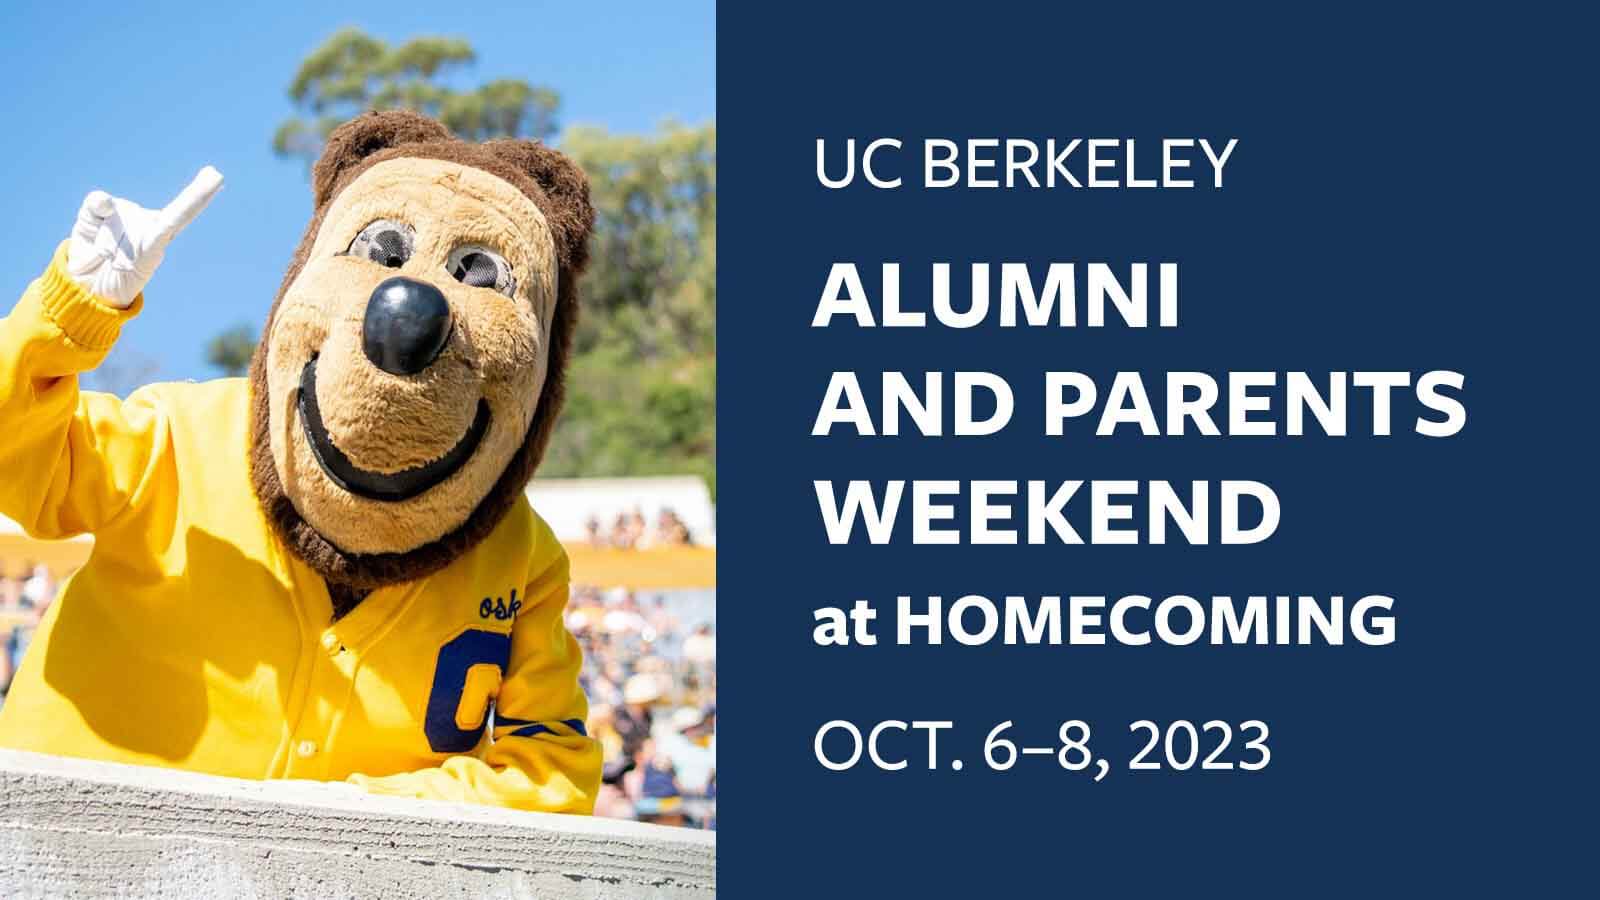 UC Berkeley Alumni and Parents Weekend at Homecoming. Oct 6-8, 2023